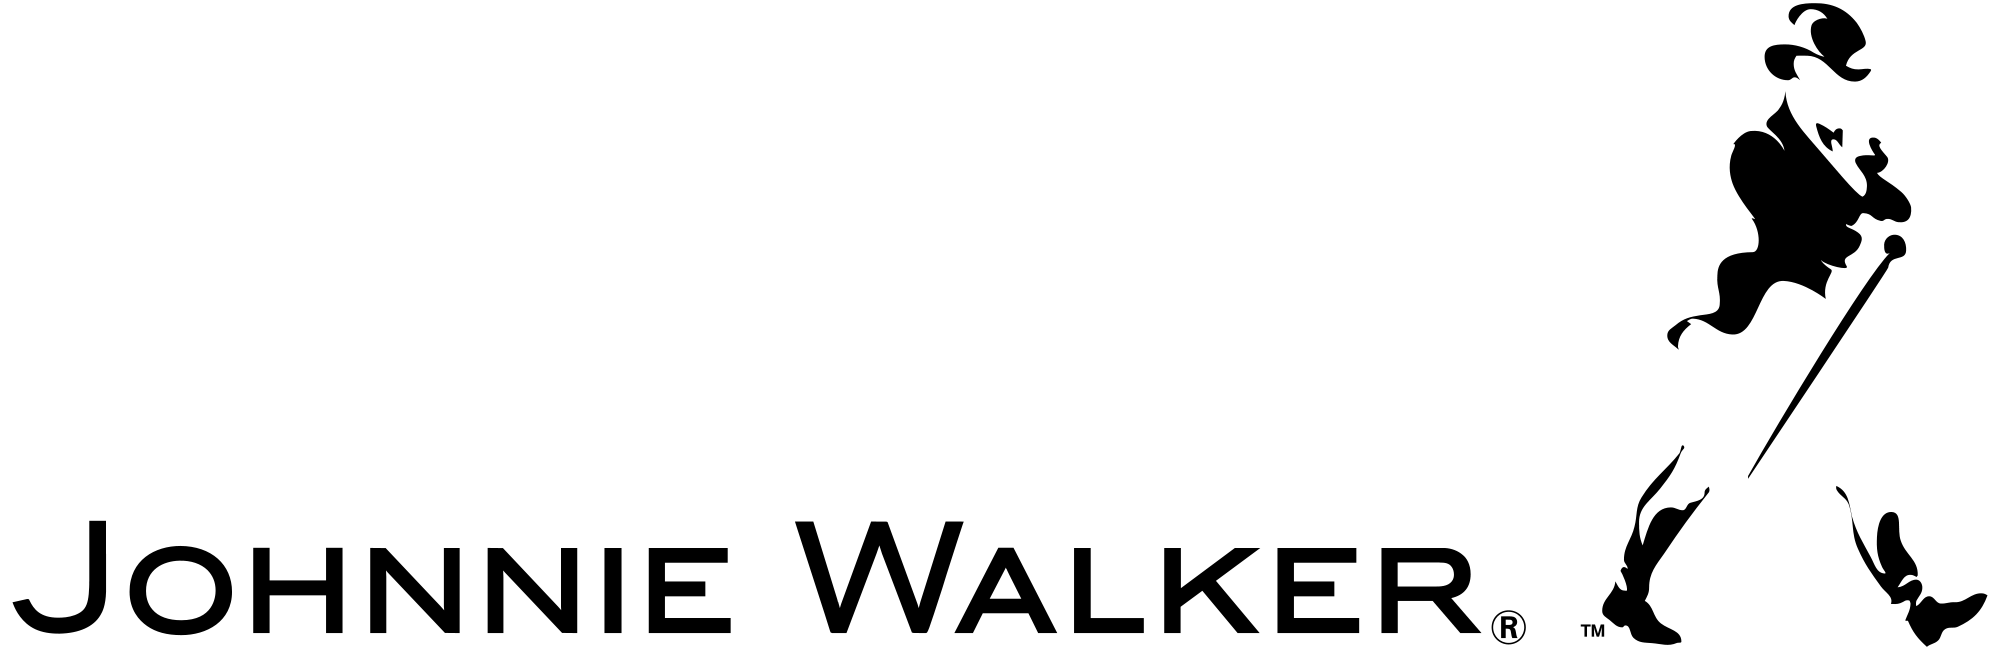 Johnnie Walker Logos Hd - Walker, Transparent background PNG HD thumbnail